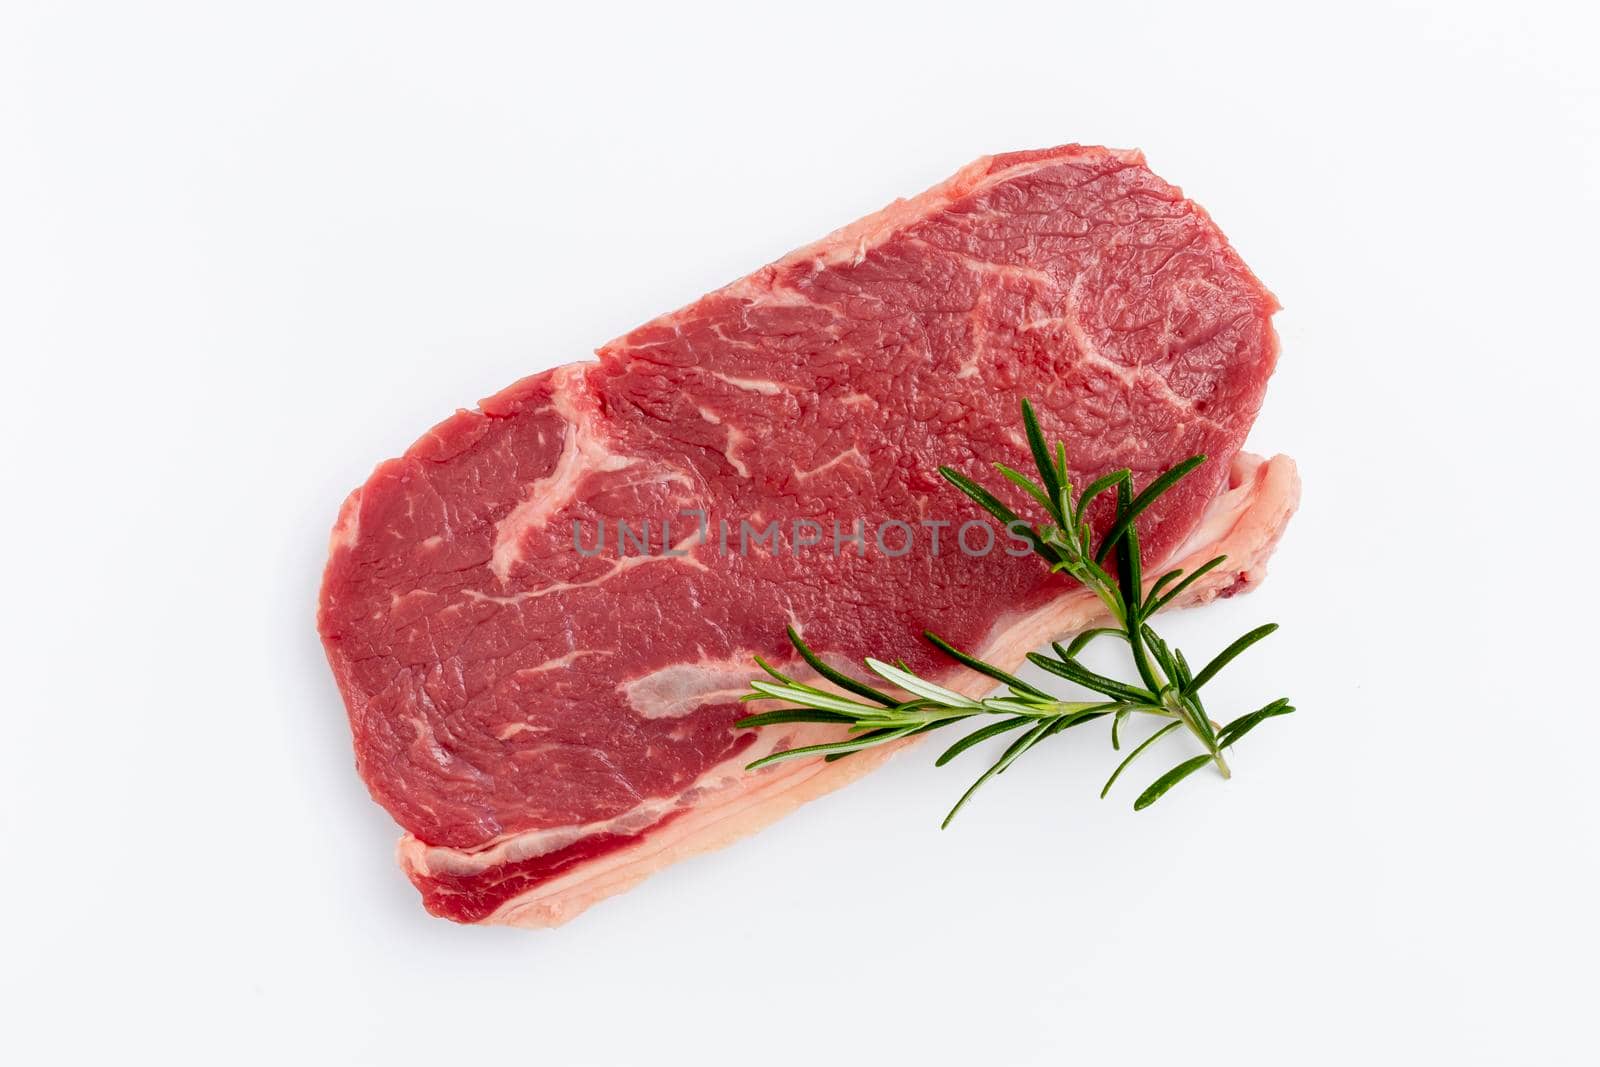 Bio fresh steak isolated on a white background.